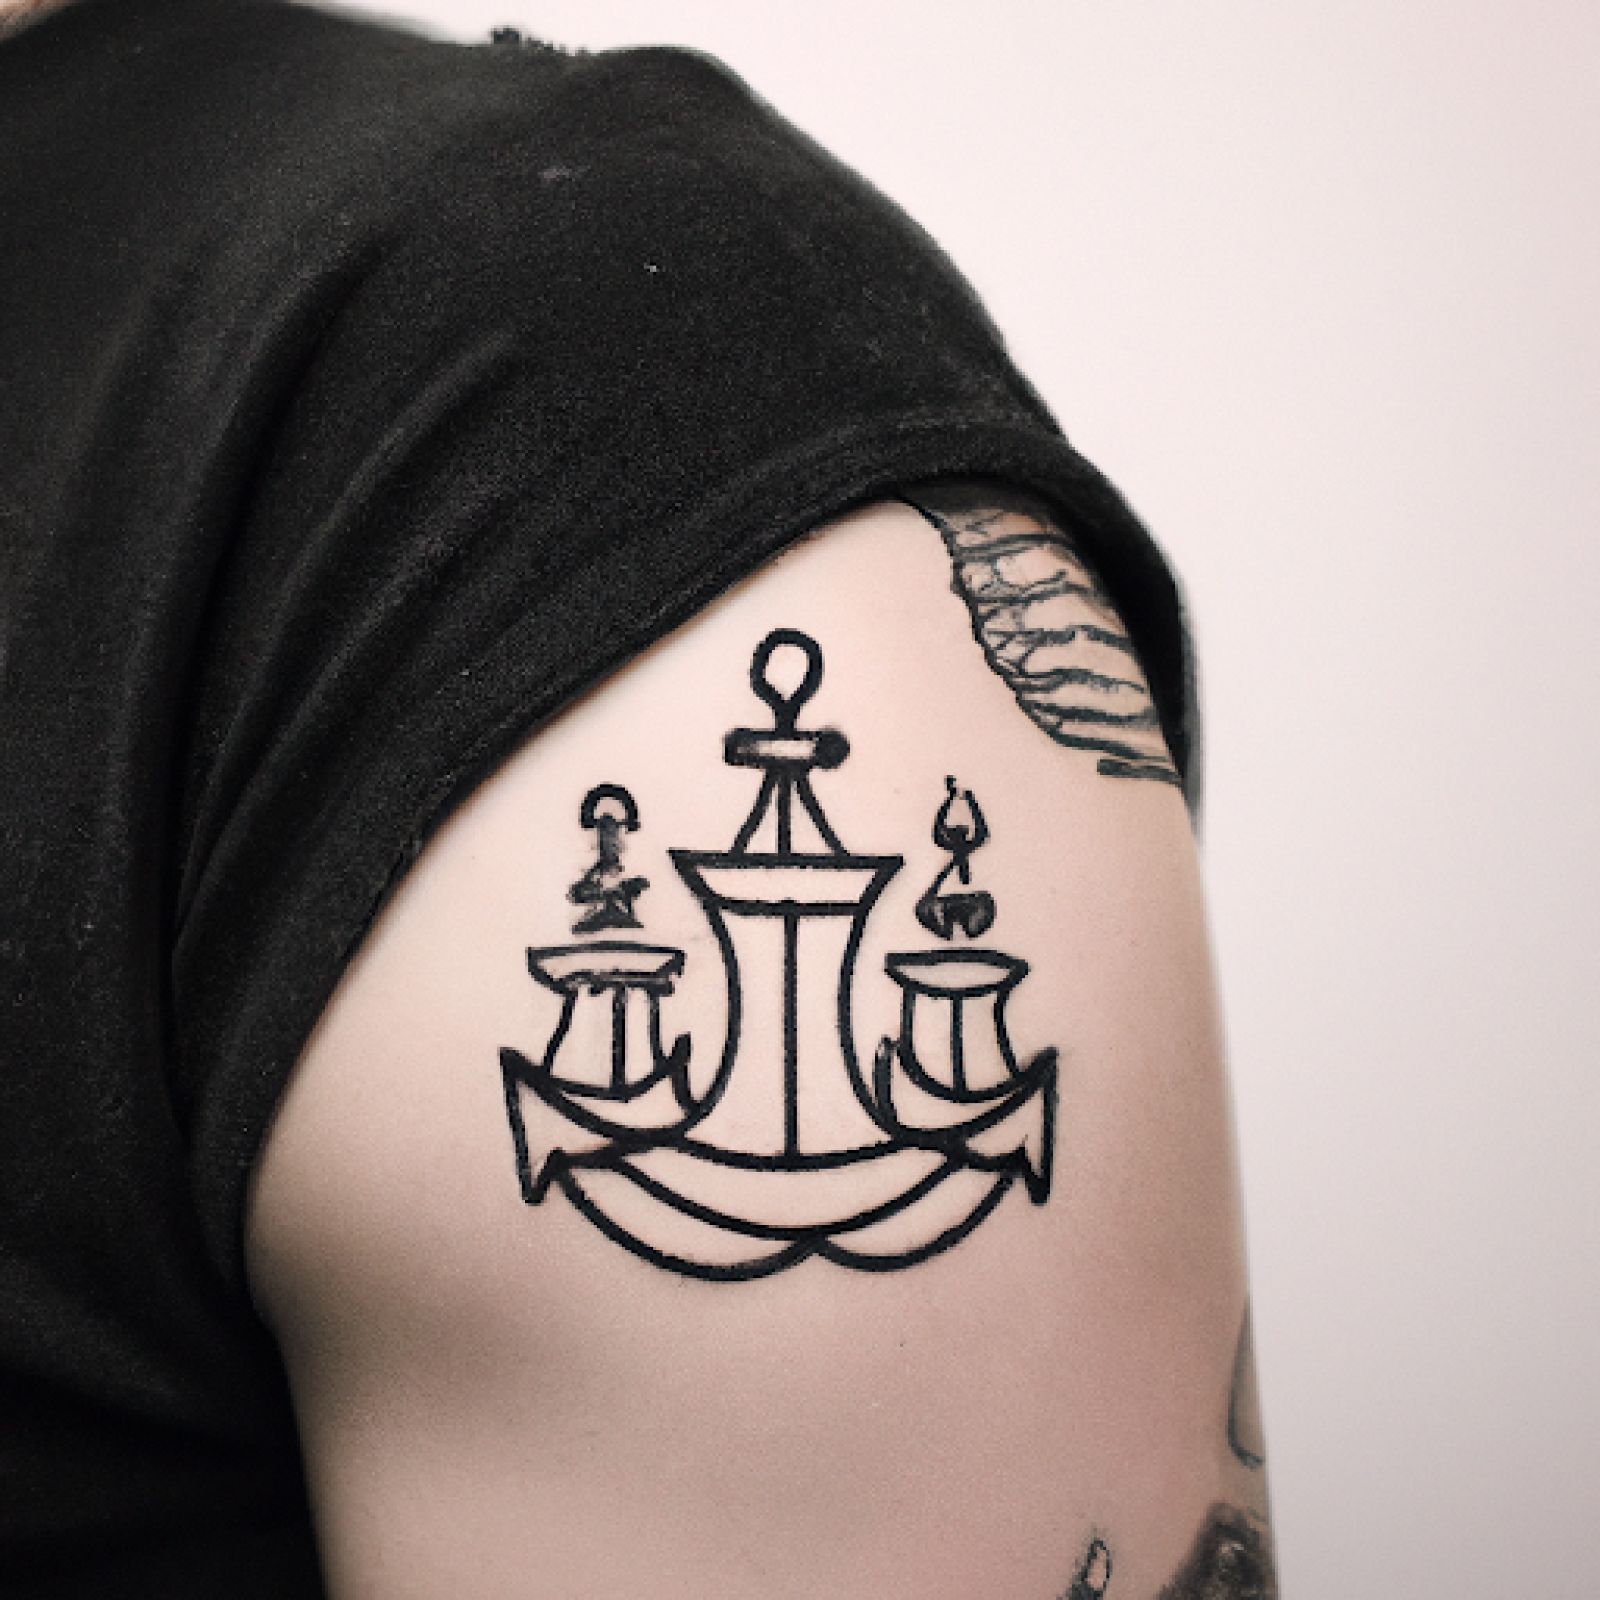 Ship tattoo on sternum for men